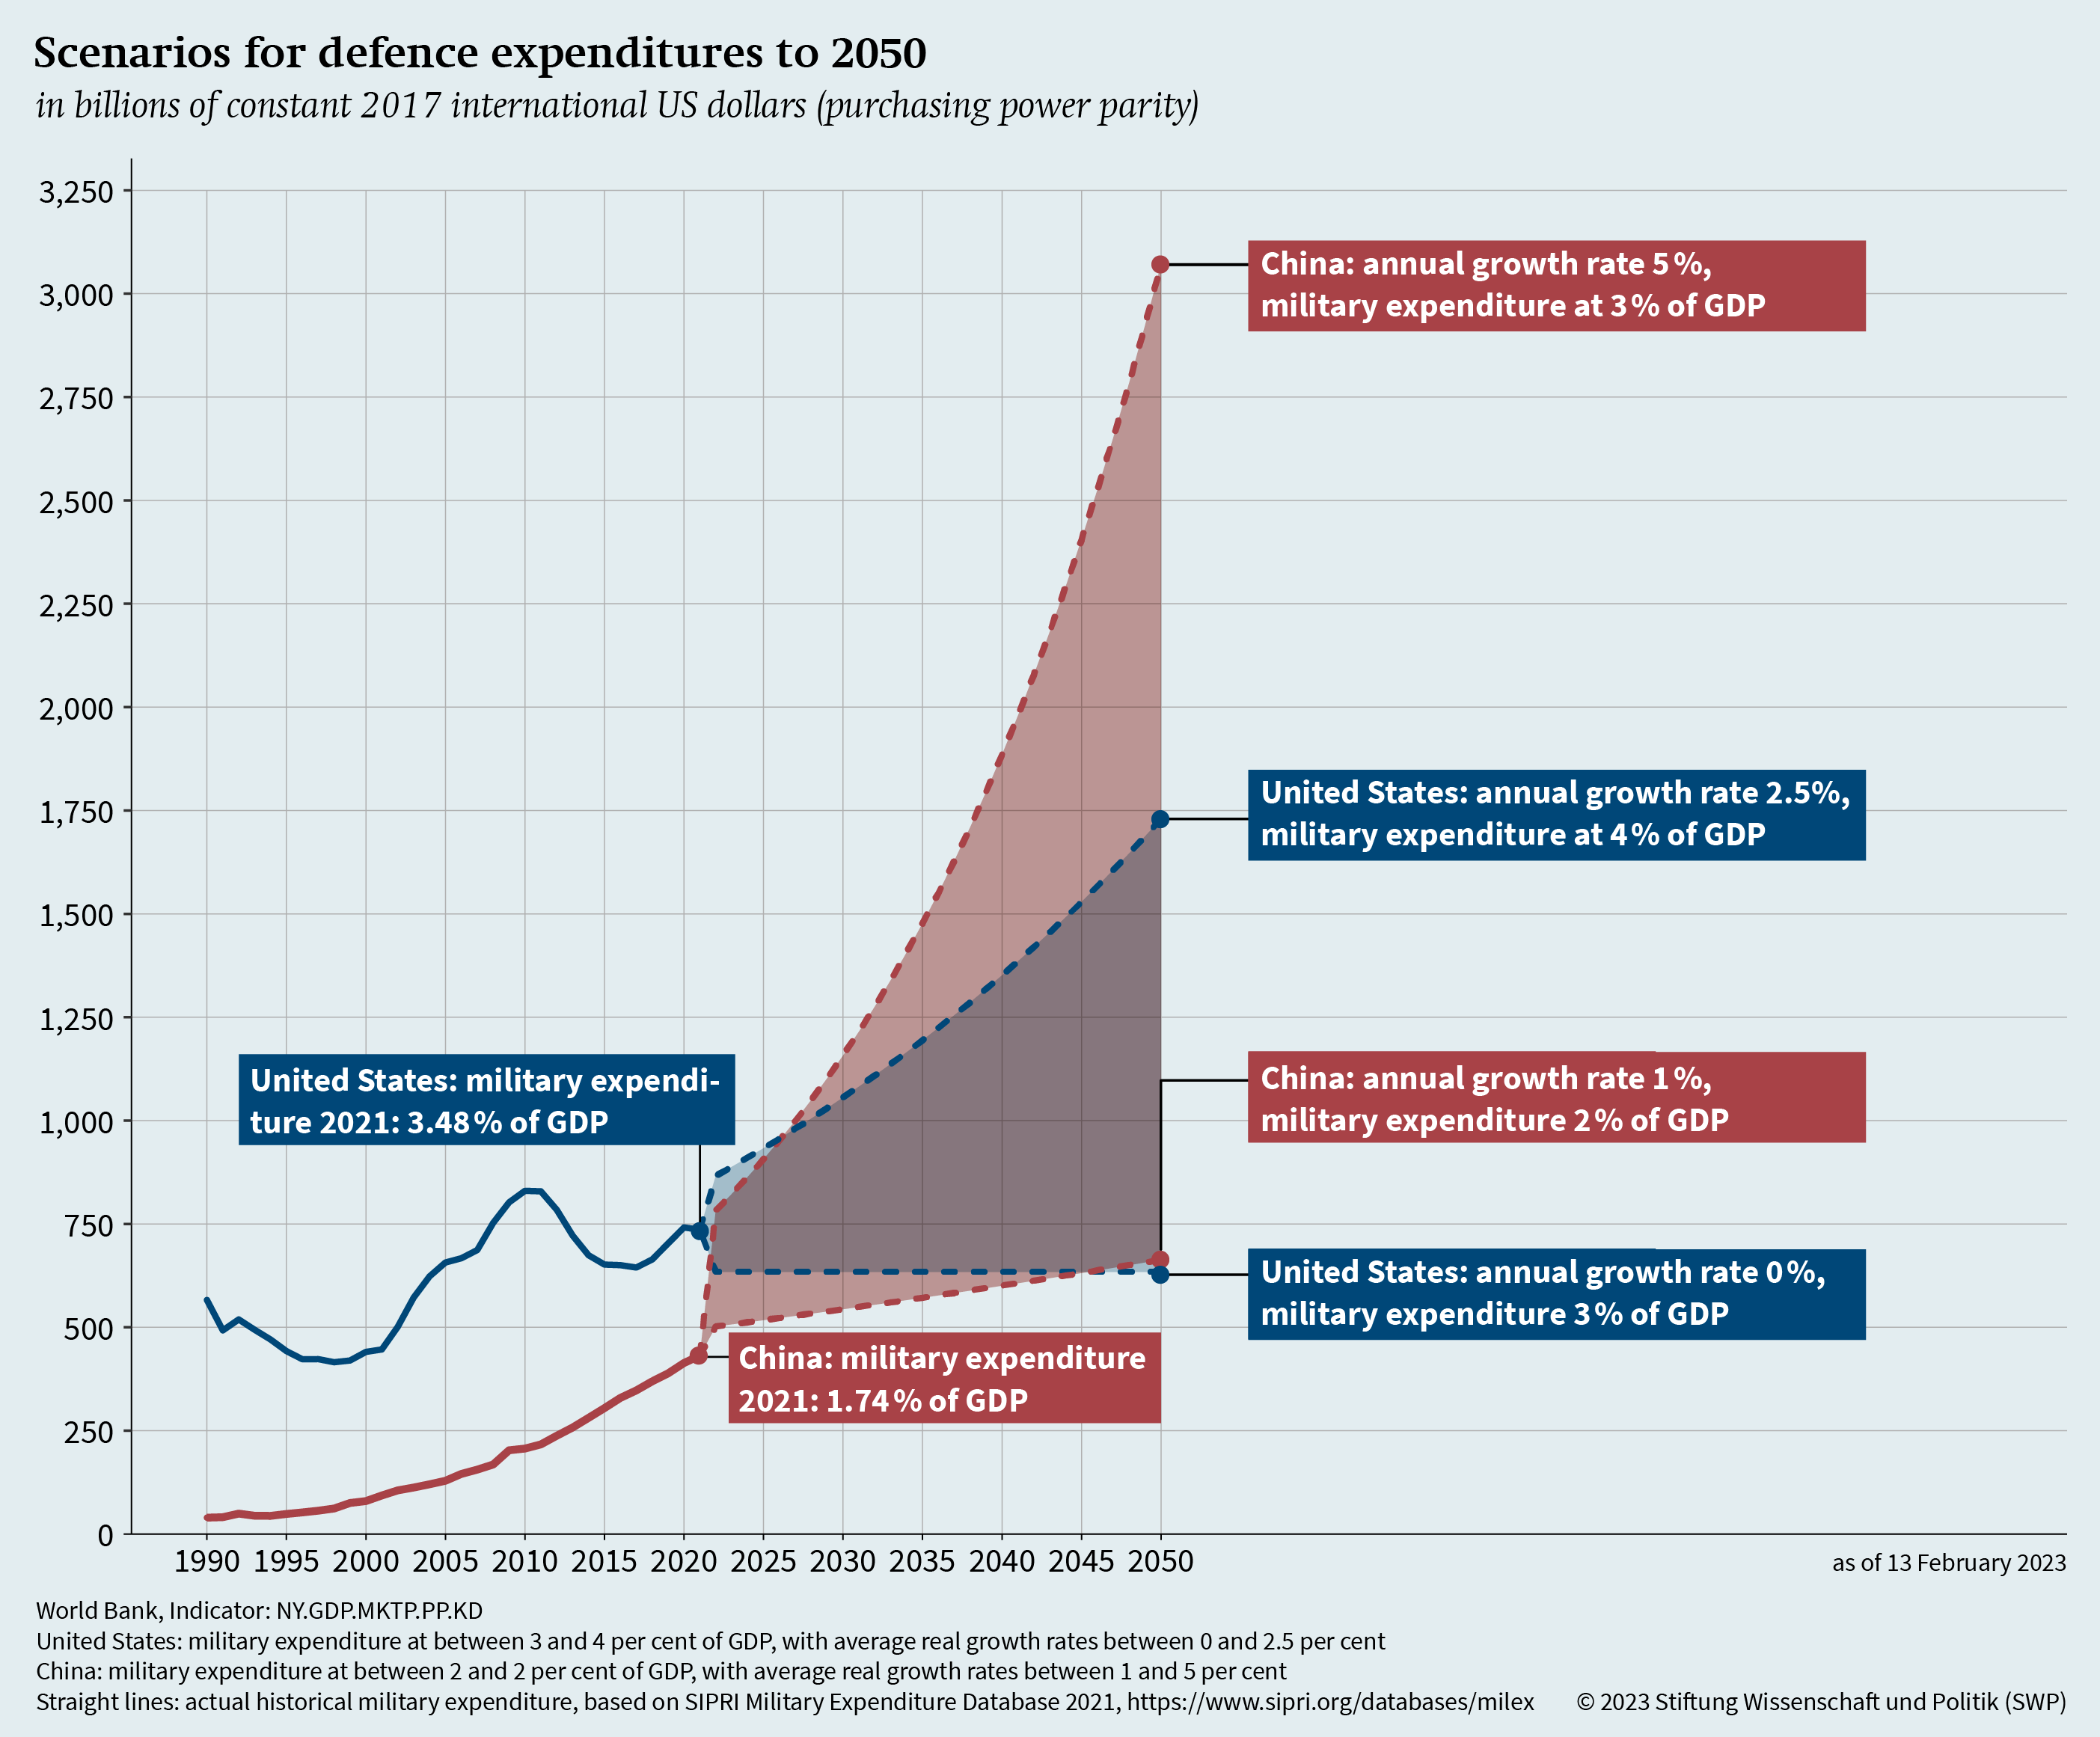 Figure 5: Scenarios for defence expenditures to 2050